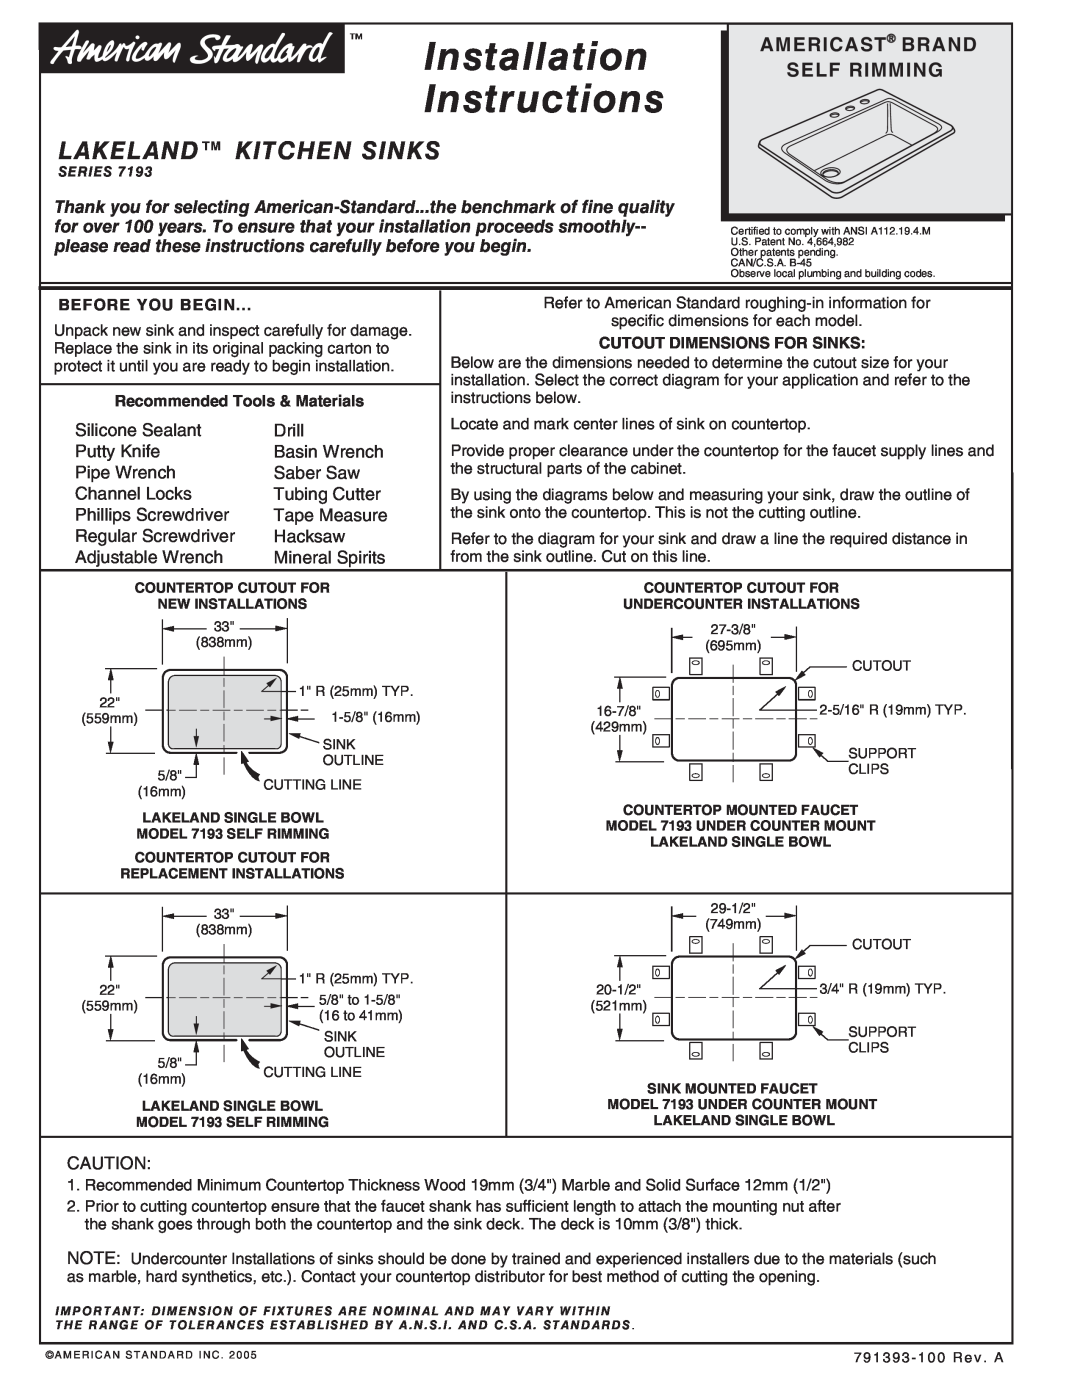 American Standard SERIES 7193 installation instructions Installation Instructions, Lakeland Kitchen Sinks 